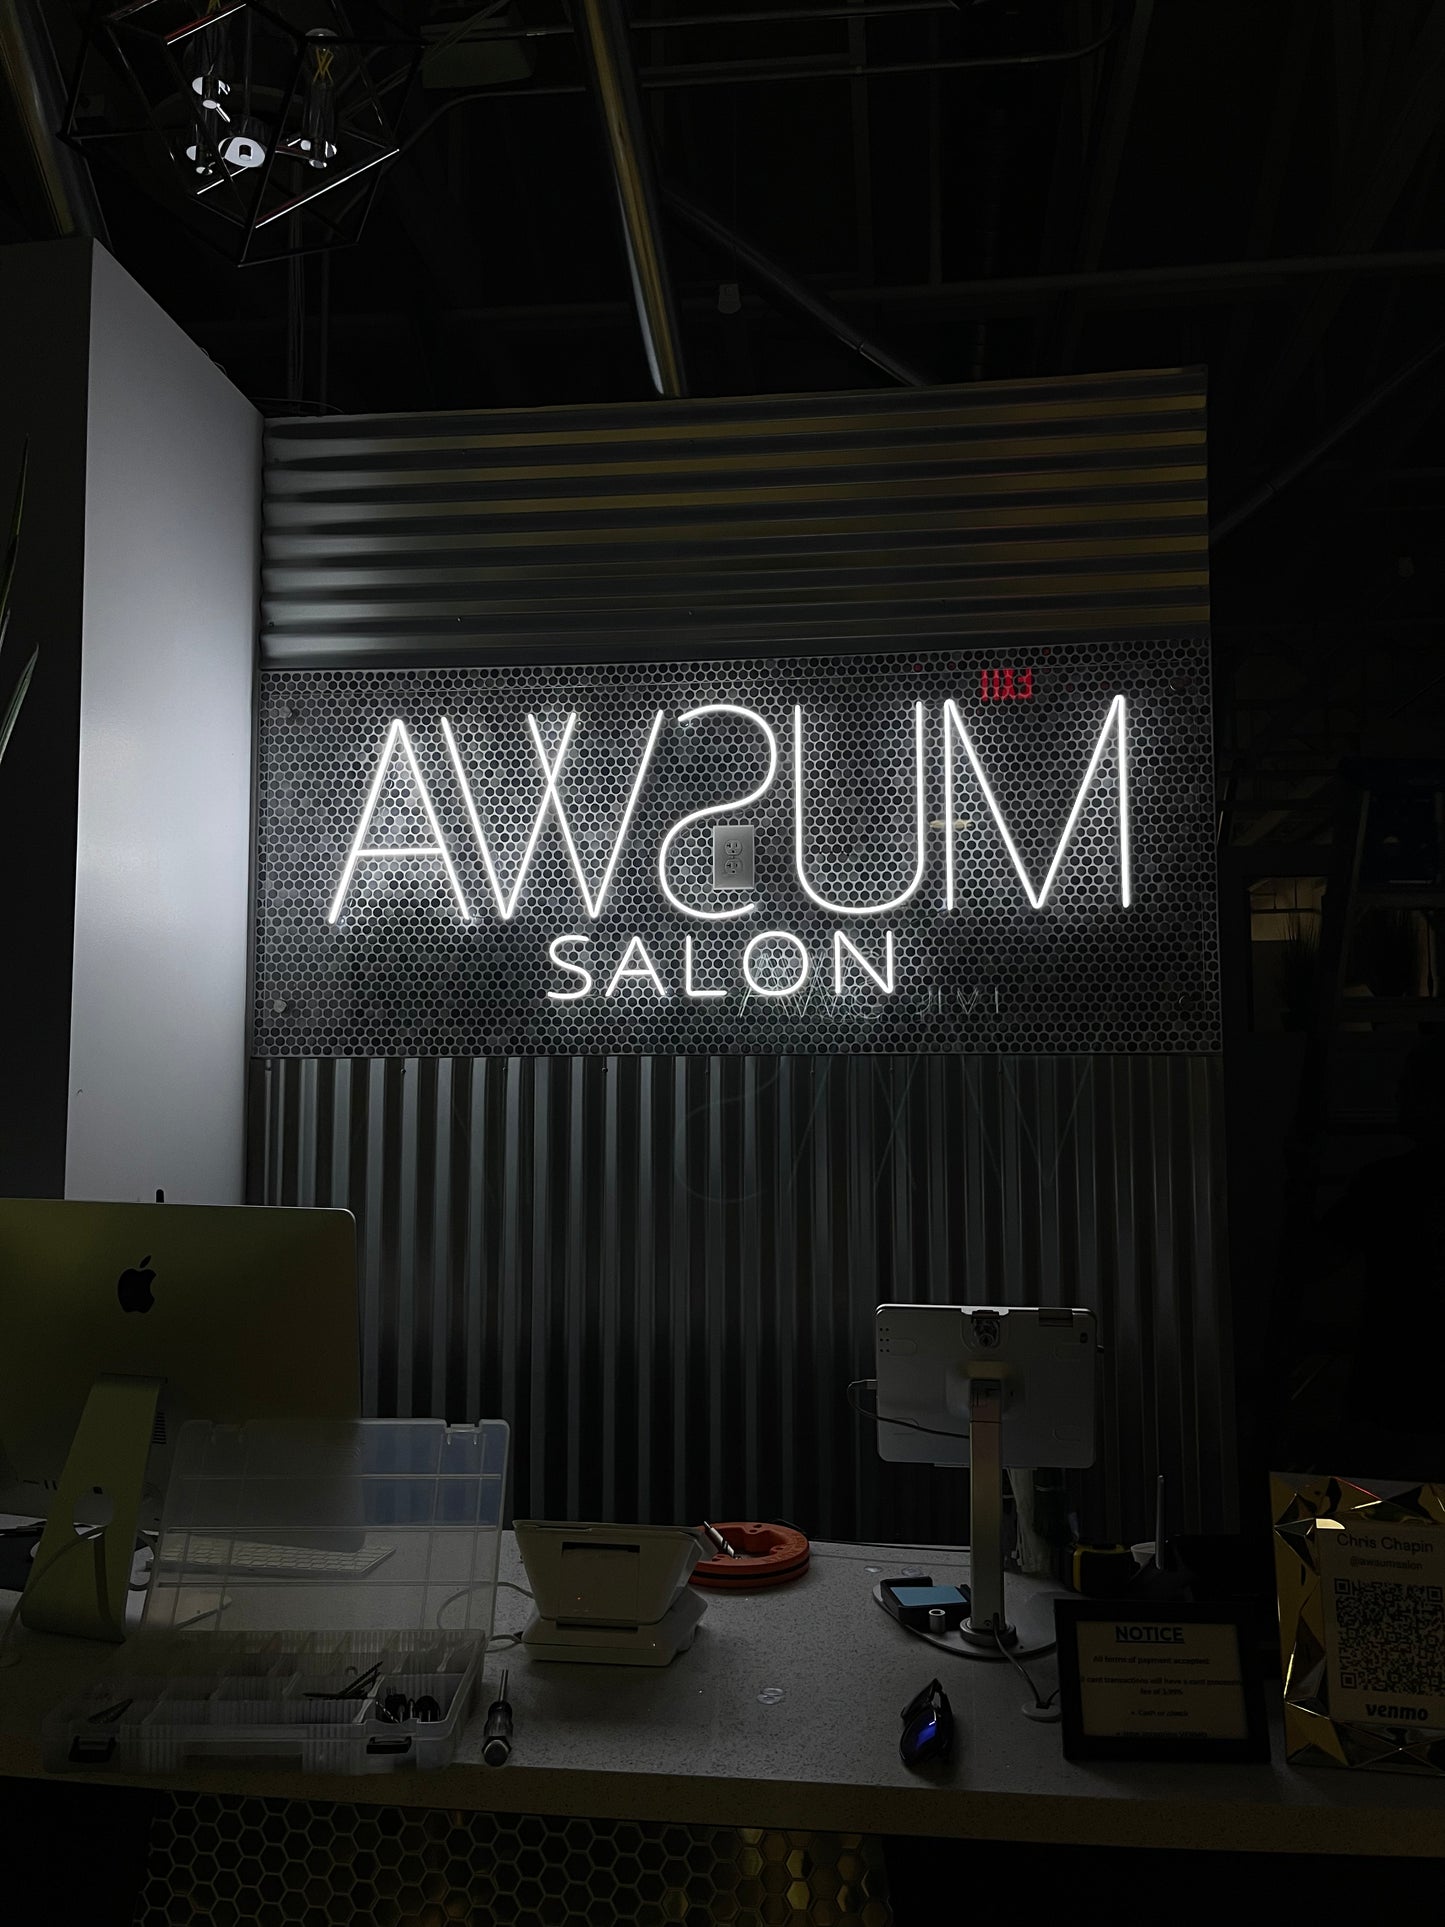 Awsum Salon